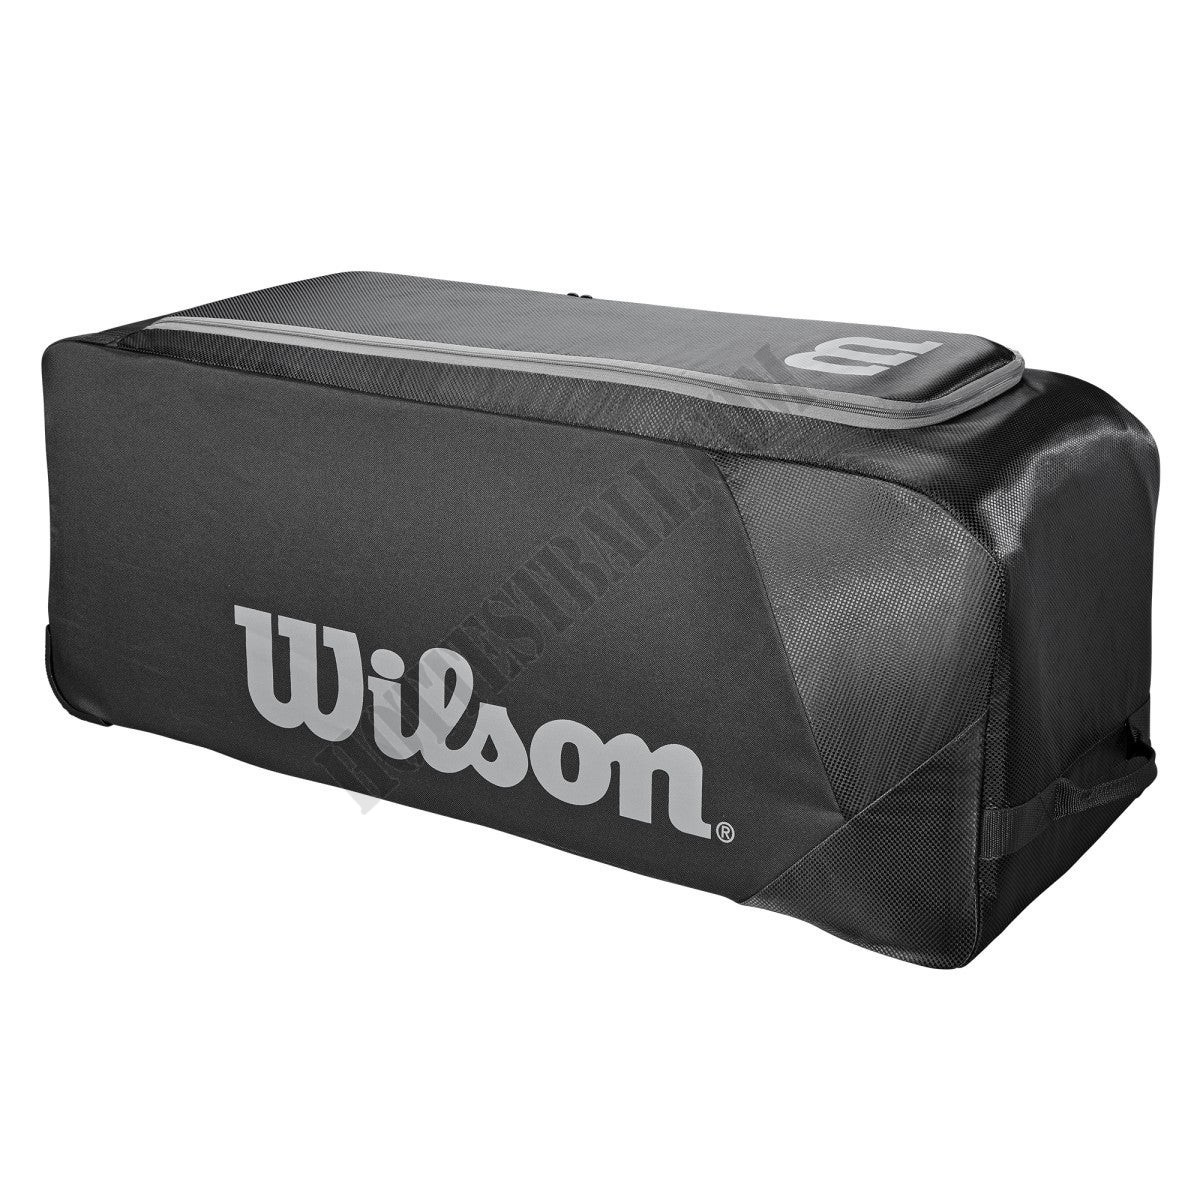 Team Gear Bag on Wheels - Wilson Discount Store - Team Gear Bag on Wheels - Wilson Discount Store